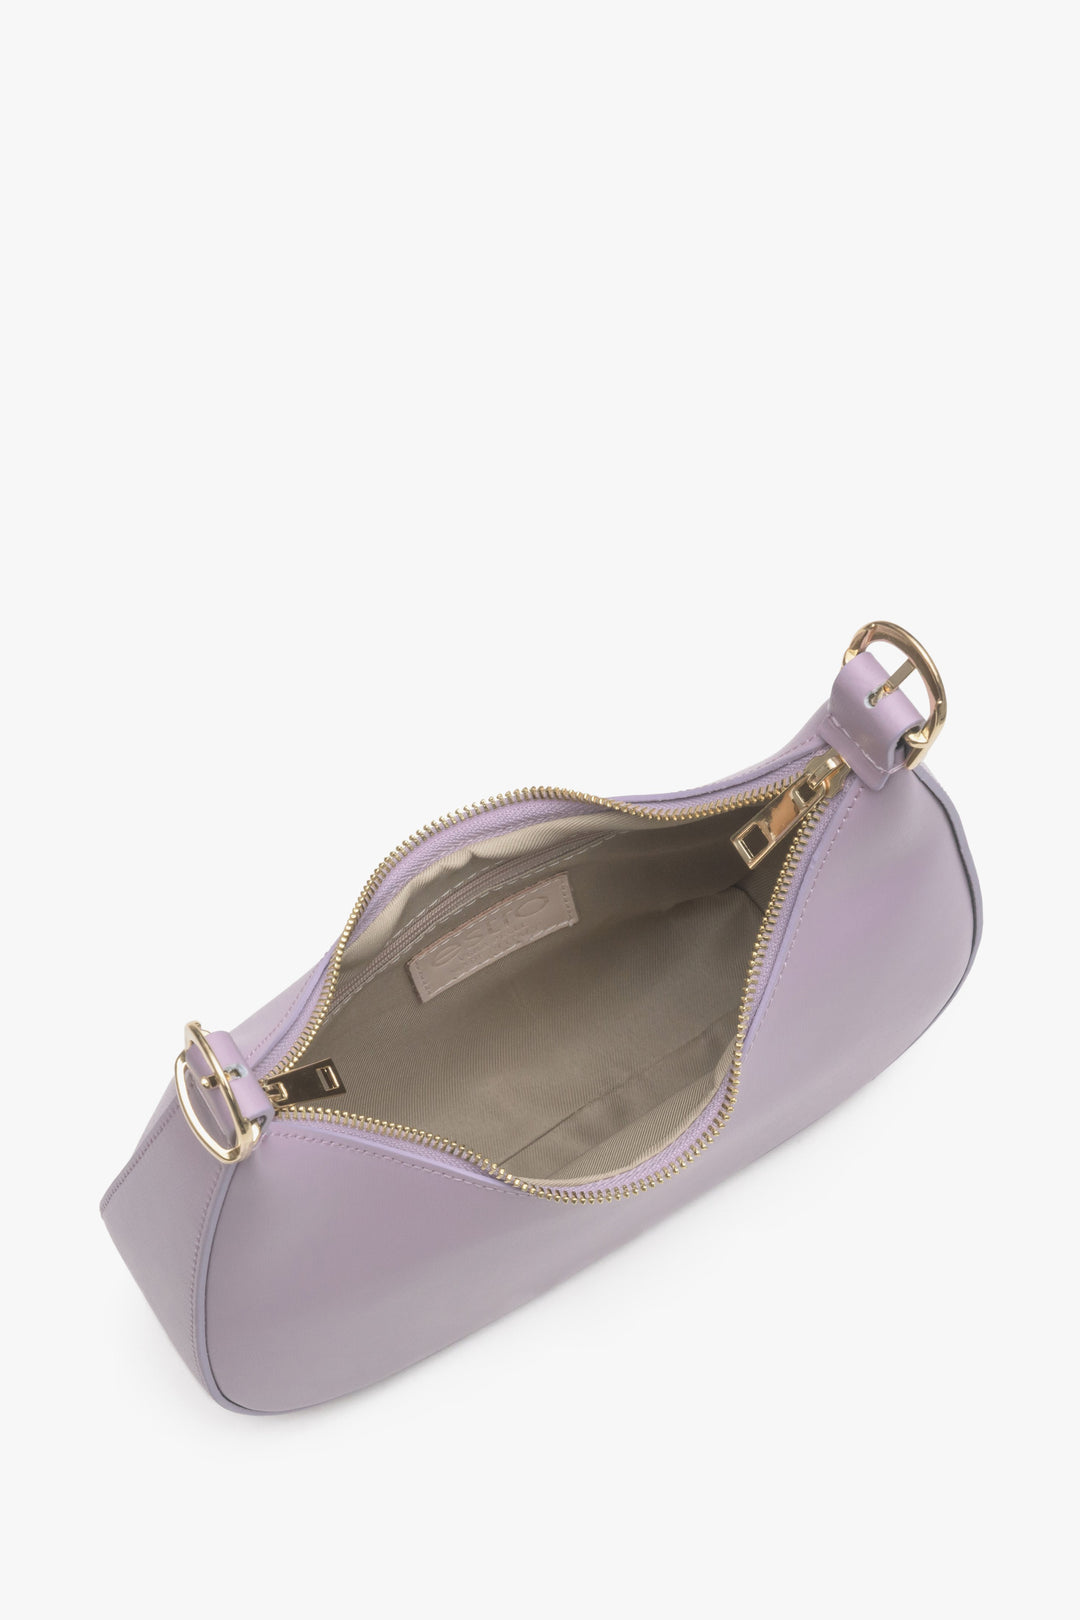 Women's purple Estro handbag - close-up on the interior.